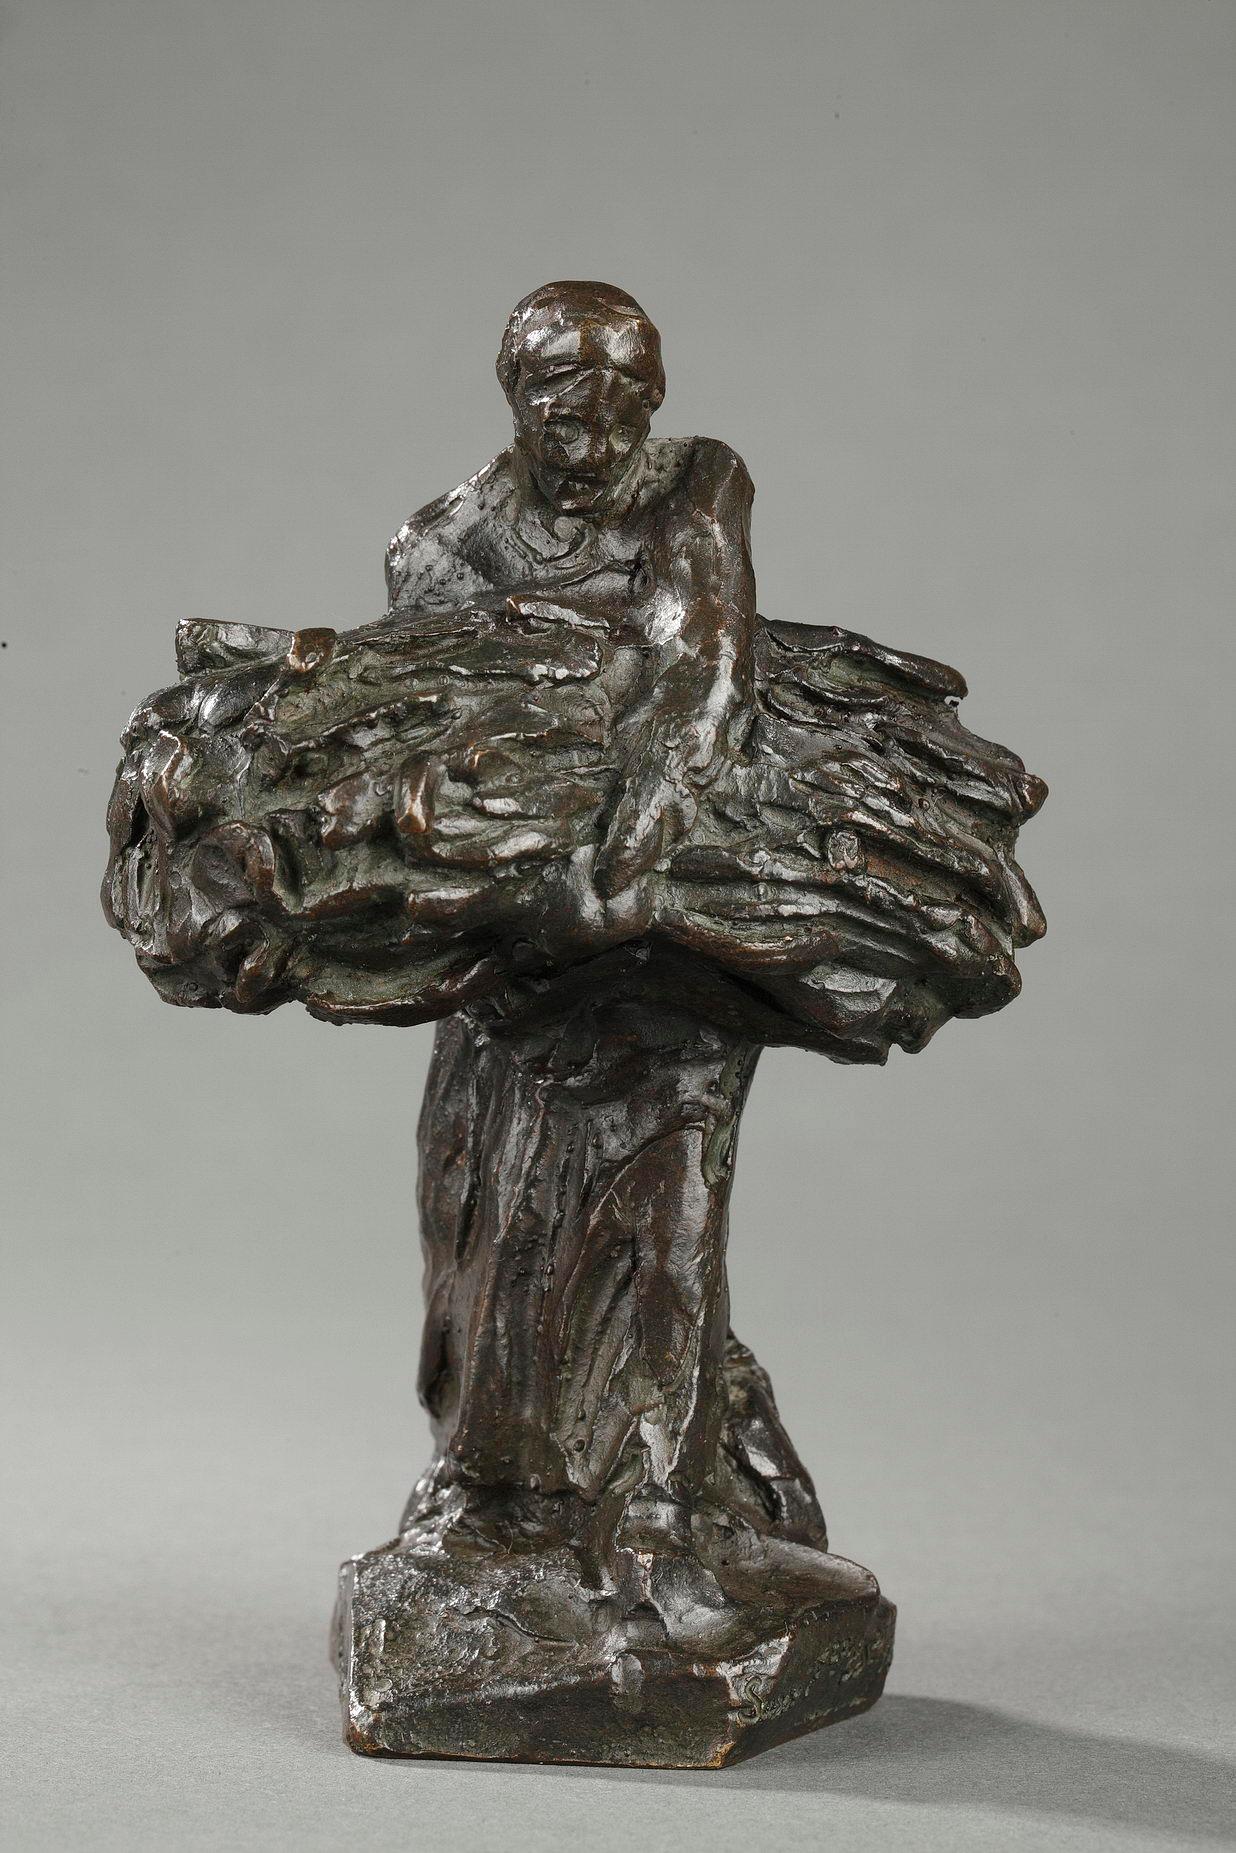 Bearer of wheat sheaves - Sculpture by Aimé-Jules Dalou